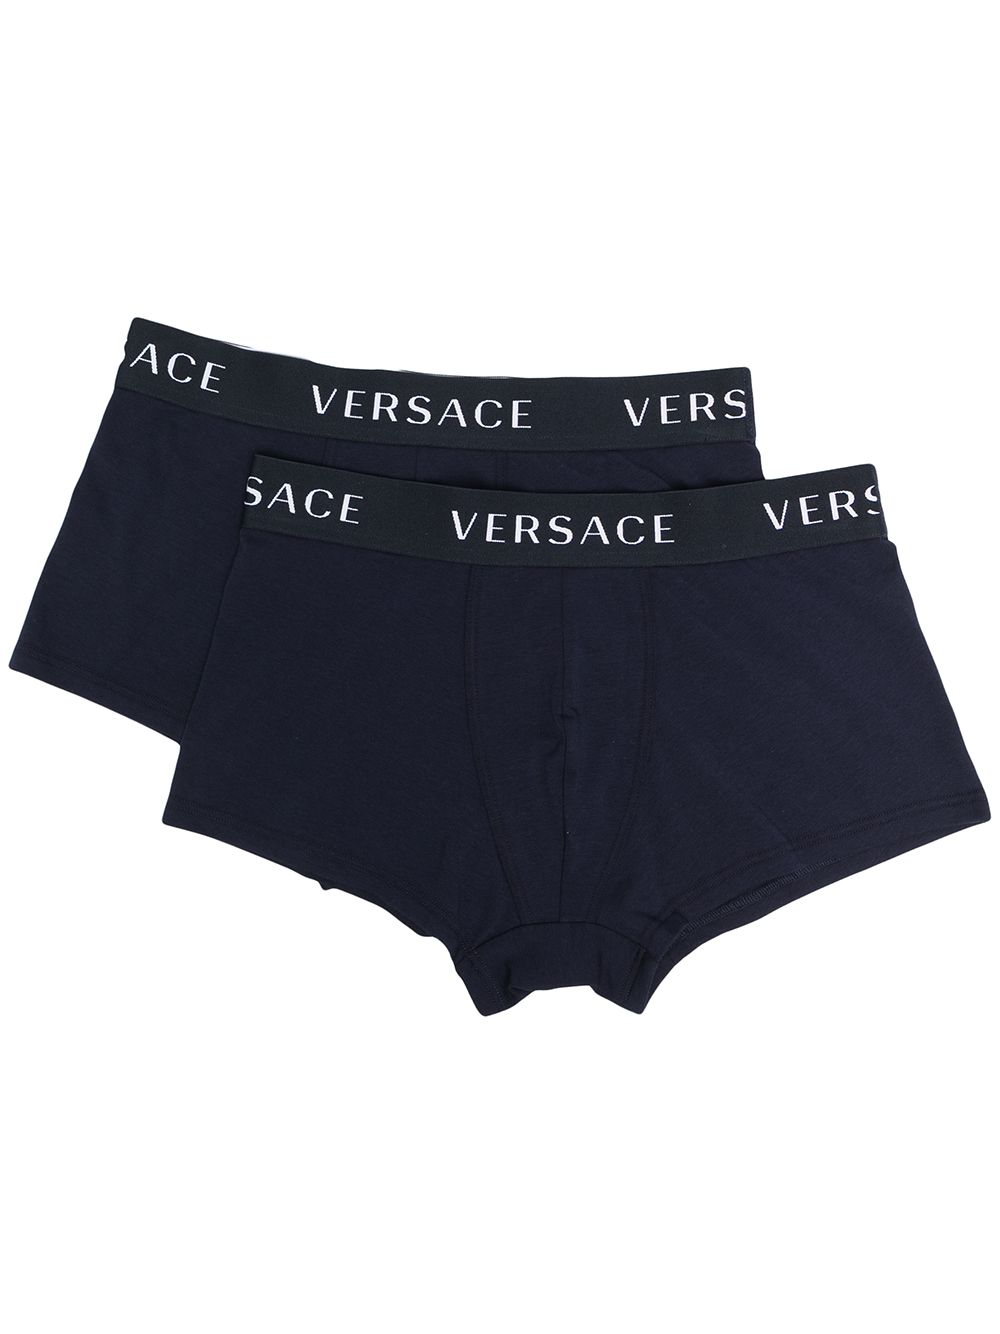 Versace two-pack logo boxer briefs - Blue